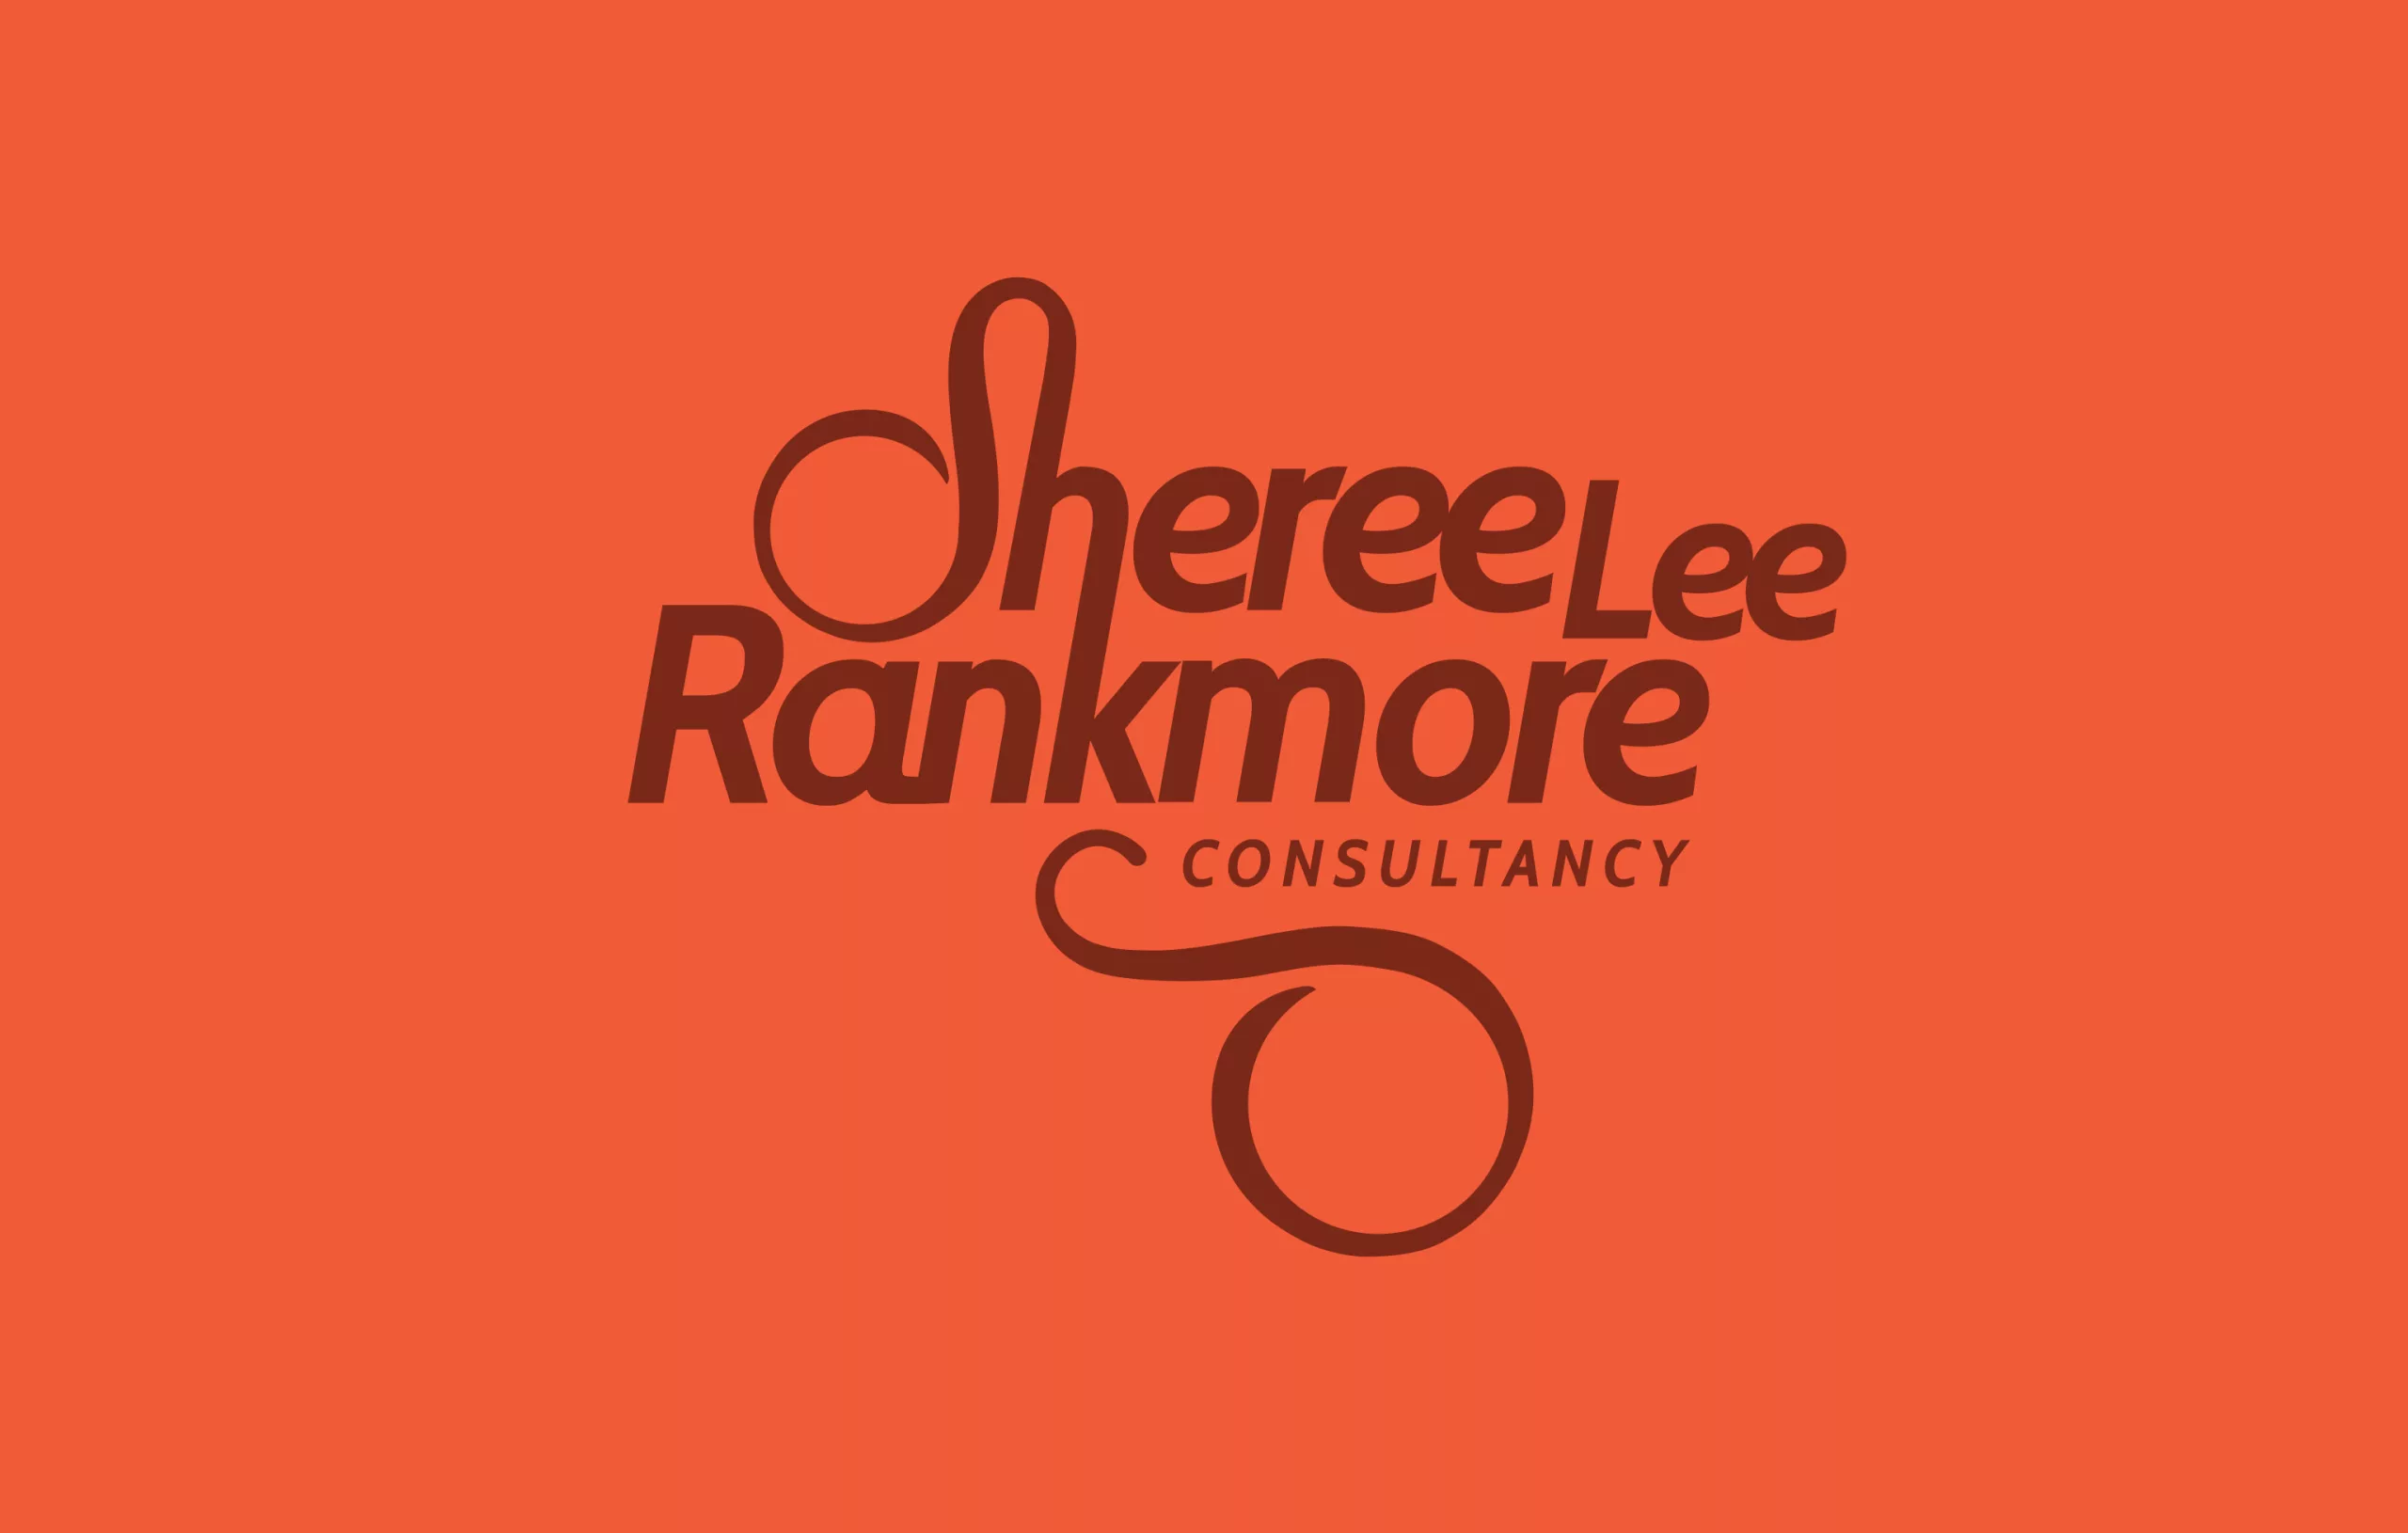 Sheree Lee Rankmore Consultancy logo design